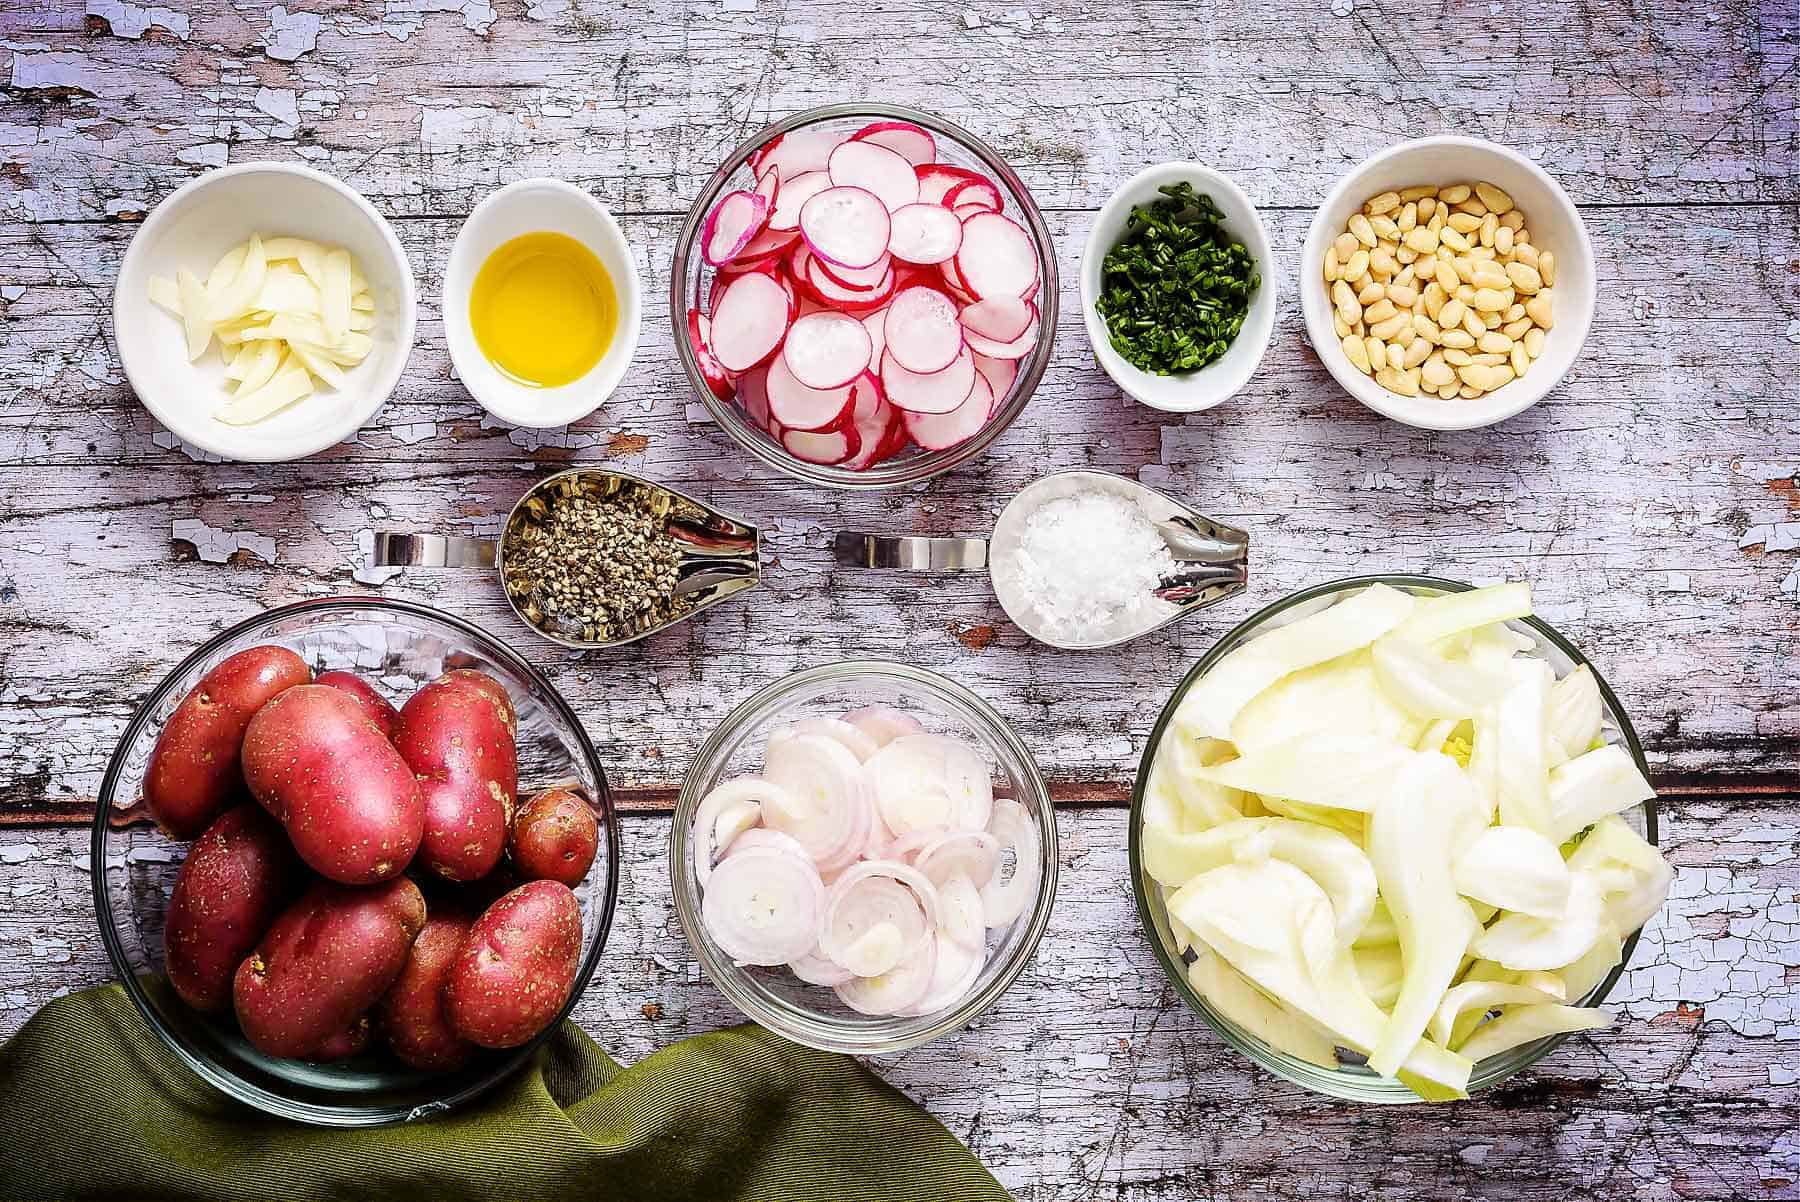 Ingredients for warm winter potato salad